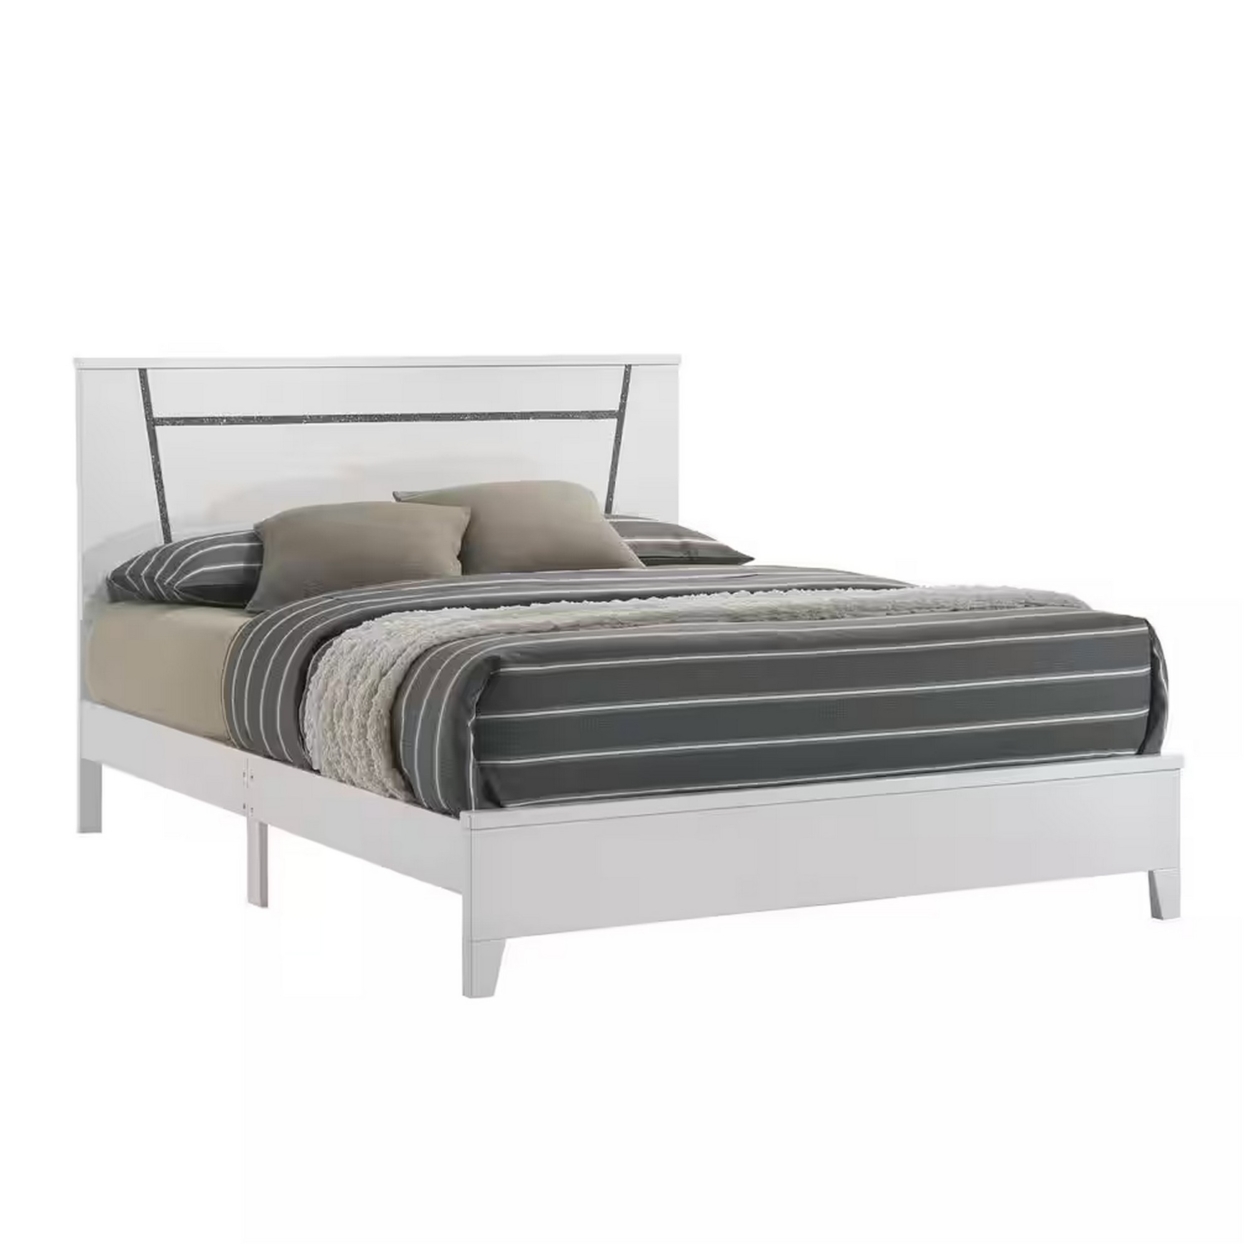 Lif High Gloss California King Bed, Glitter Filled Panel, Solid Wood, White - Saltoro Sherpi